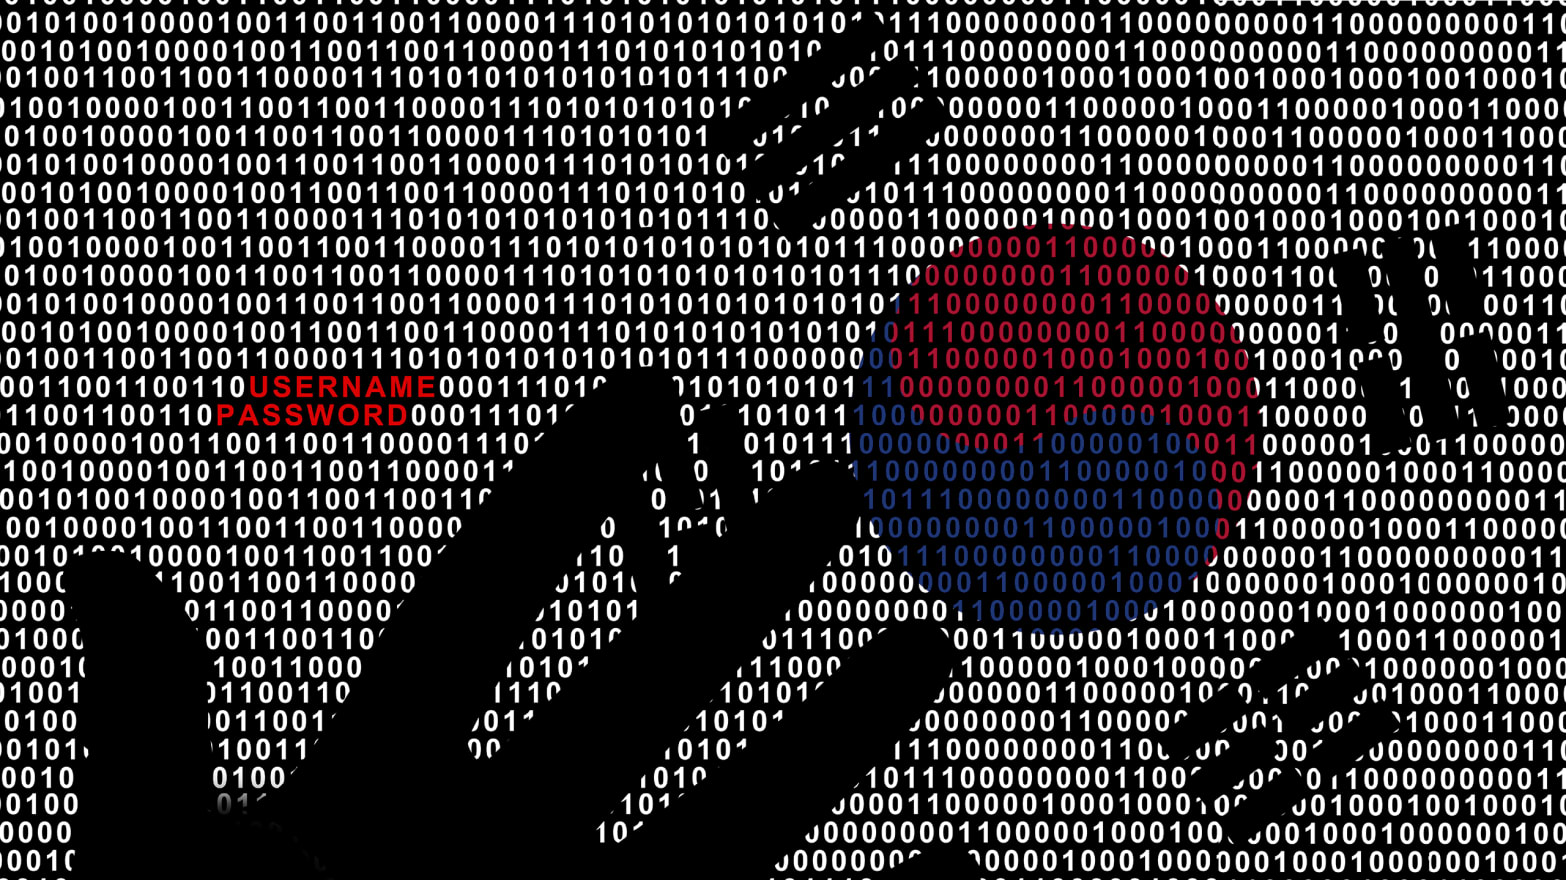 south-korea metaverse